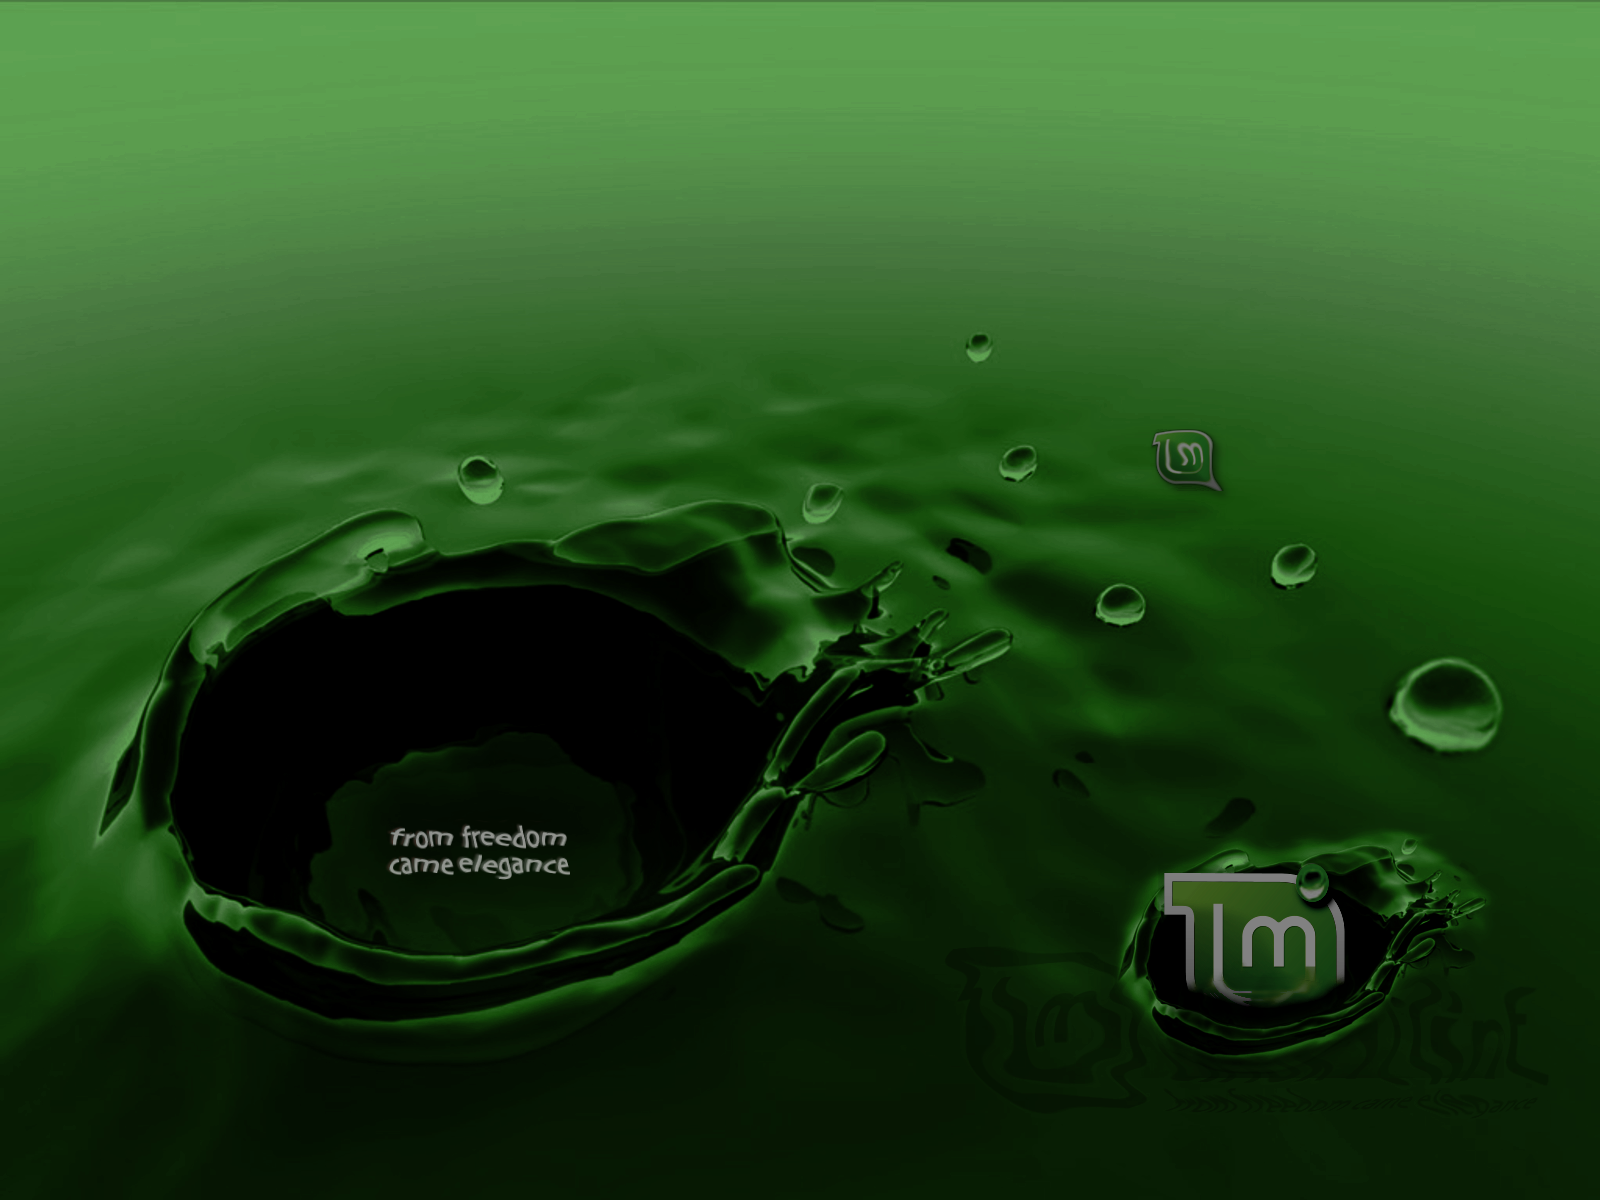 Linux Mint Forums Topic New Wallpaper Splash Updated